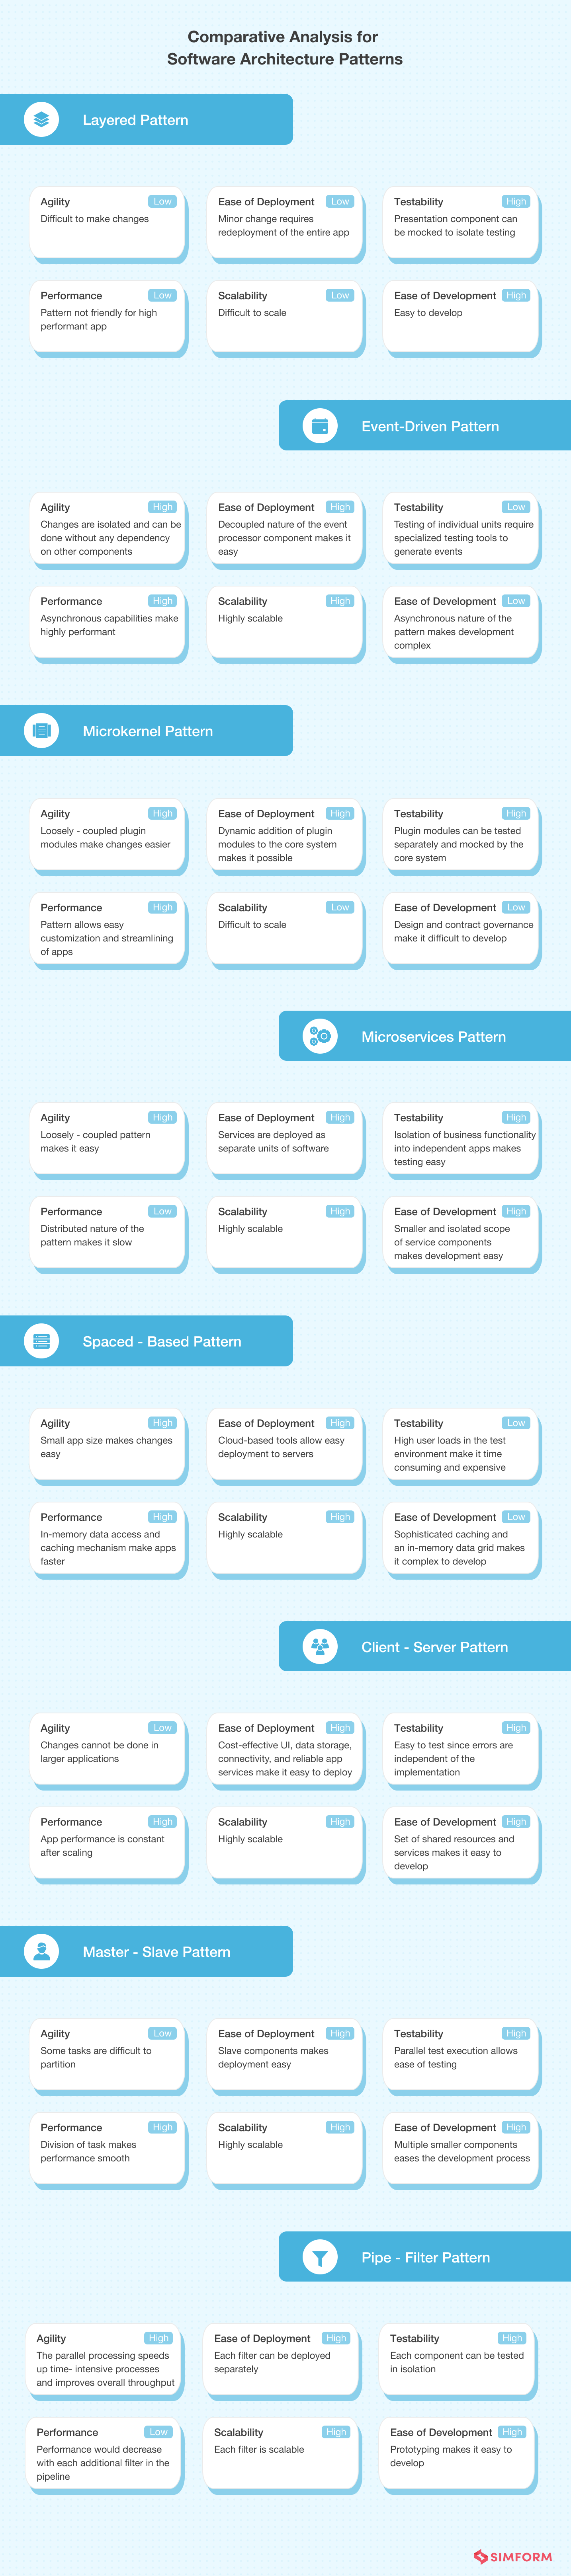 Comparison of software architecture patterns